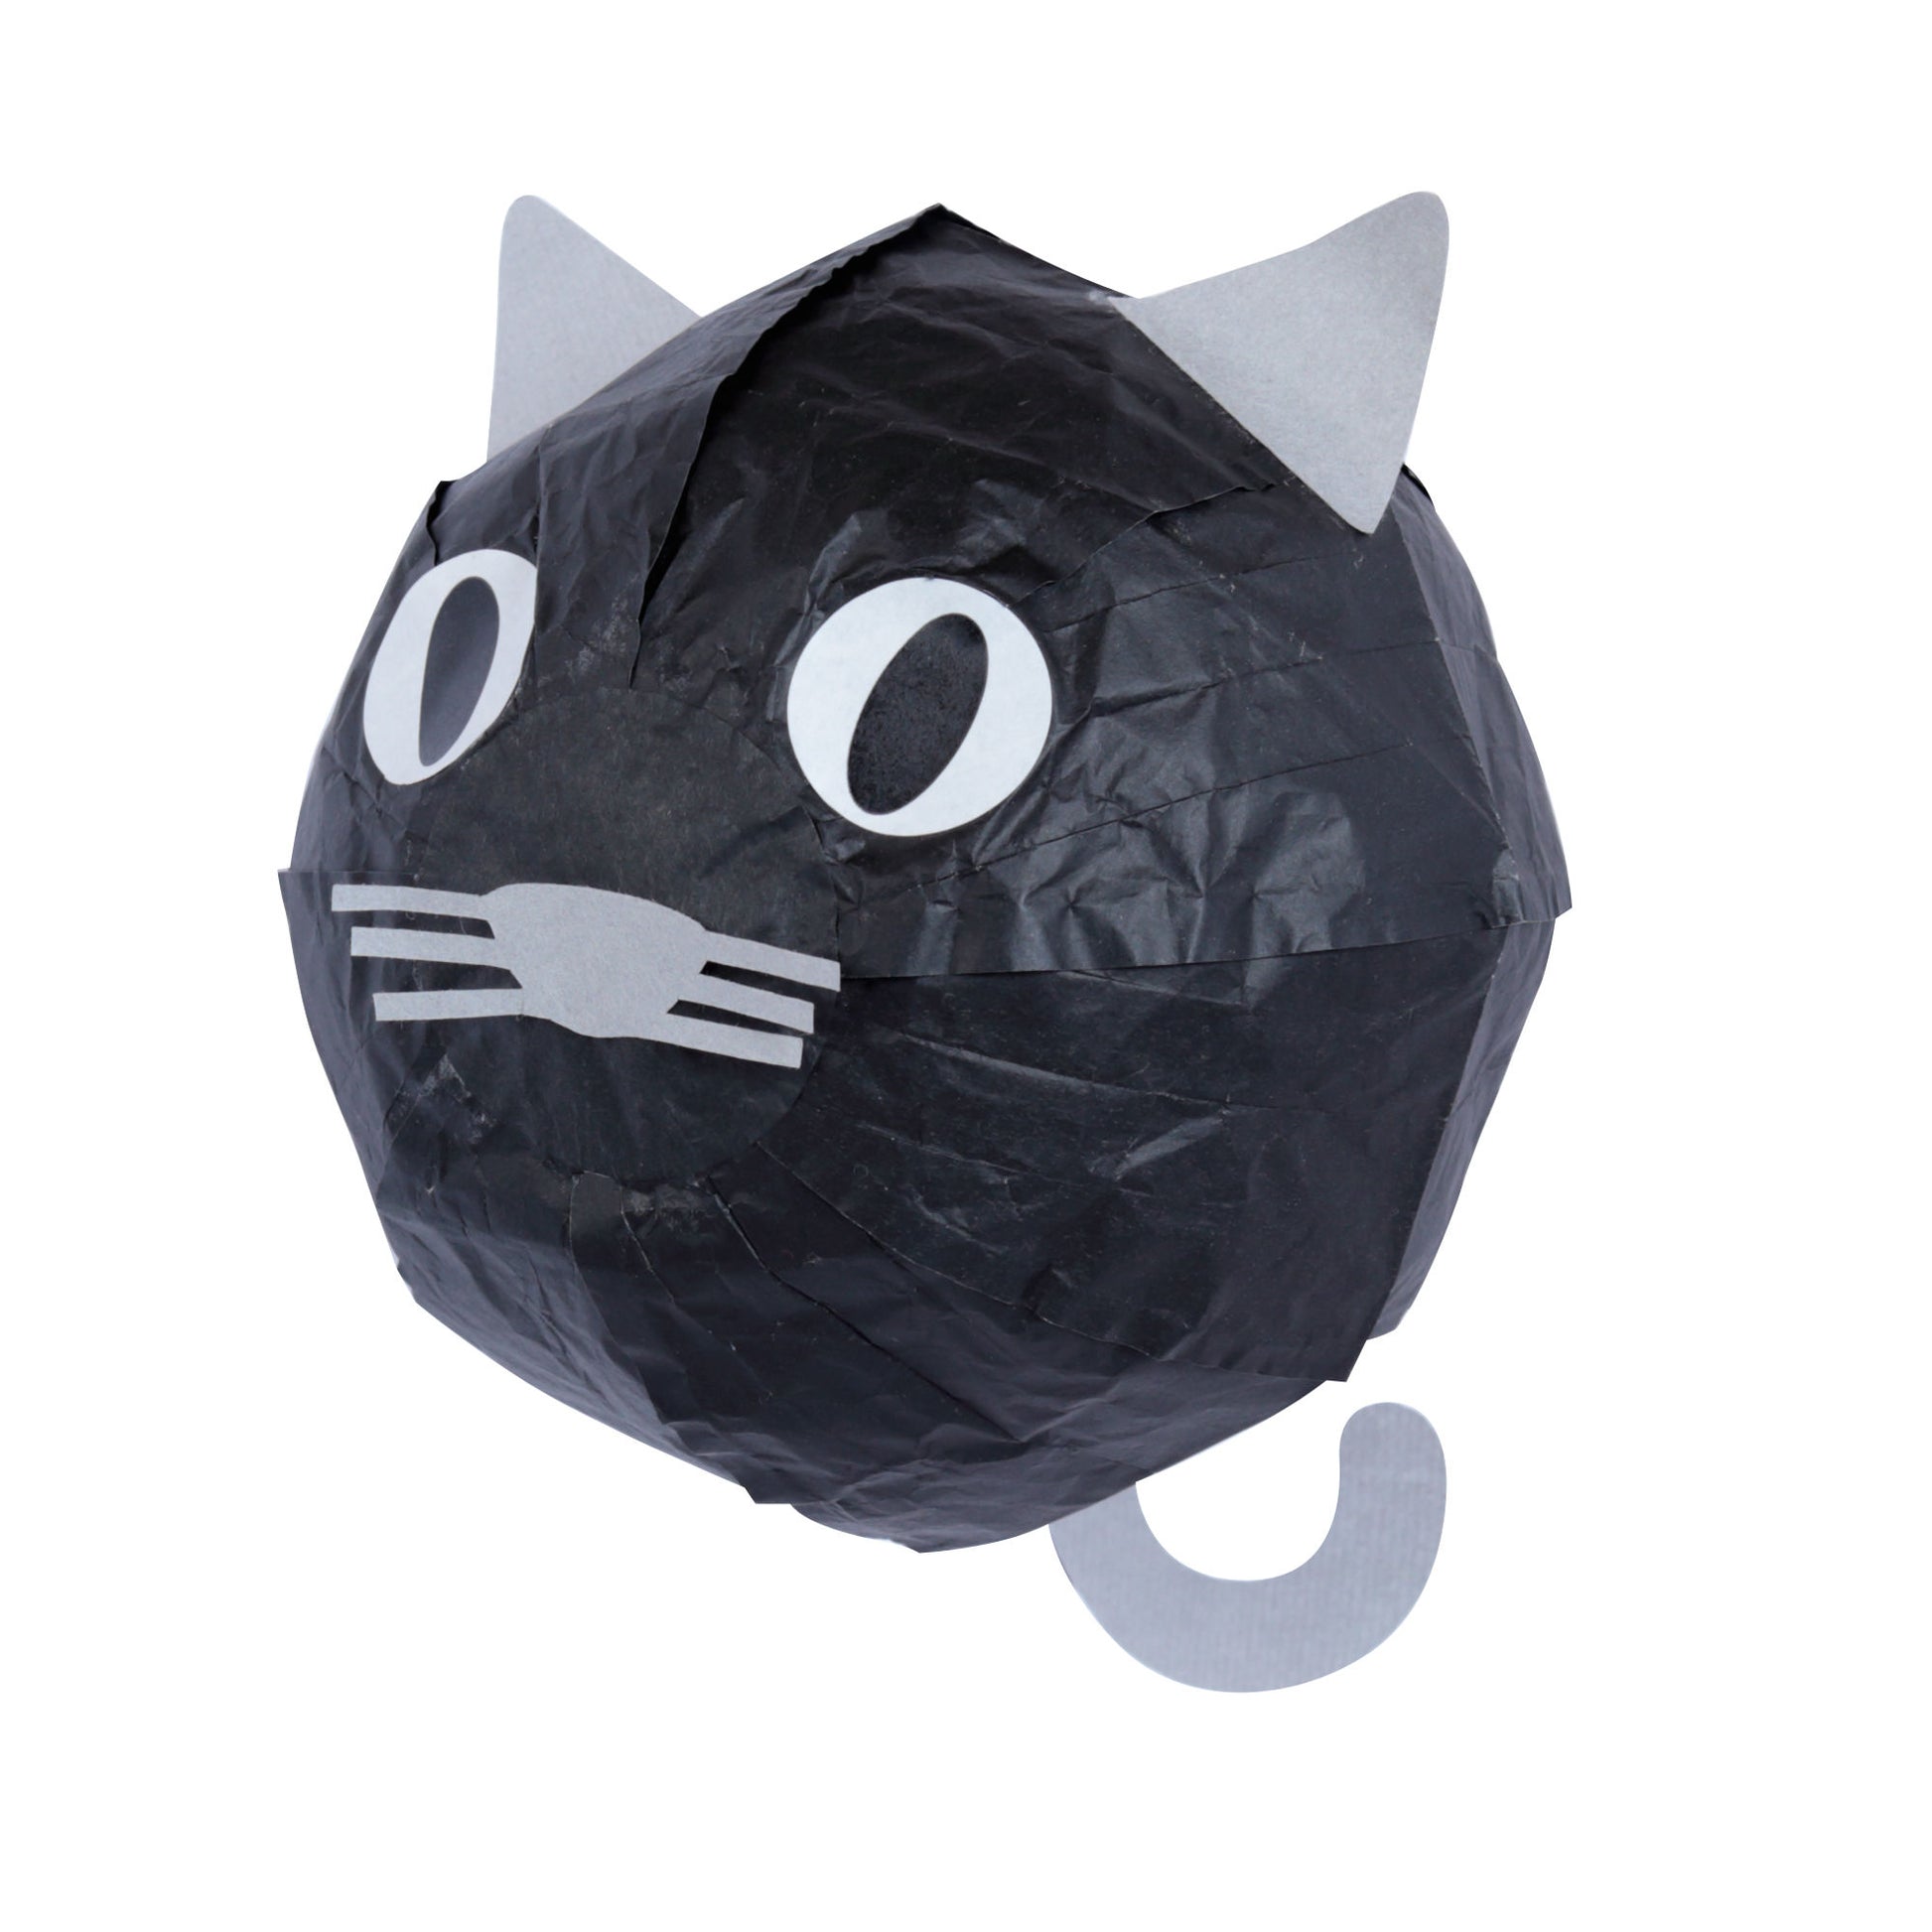 Japanese Paper Balloon - Black Cat